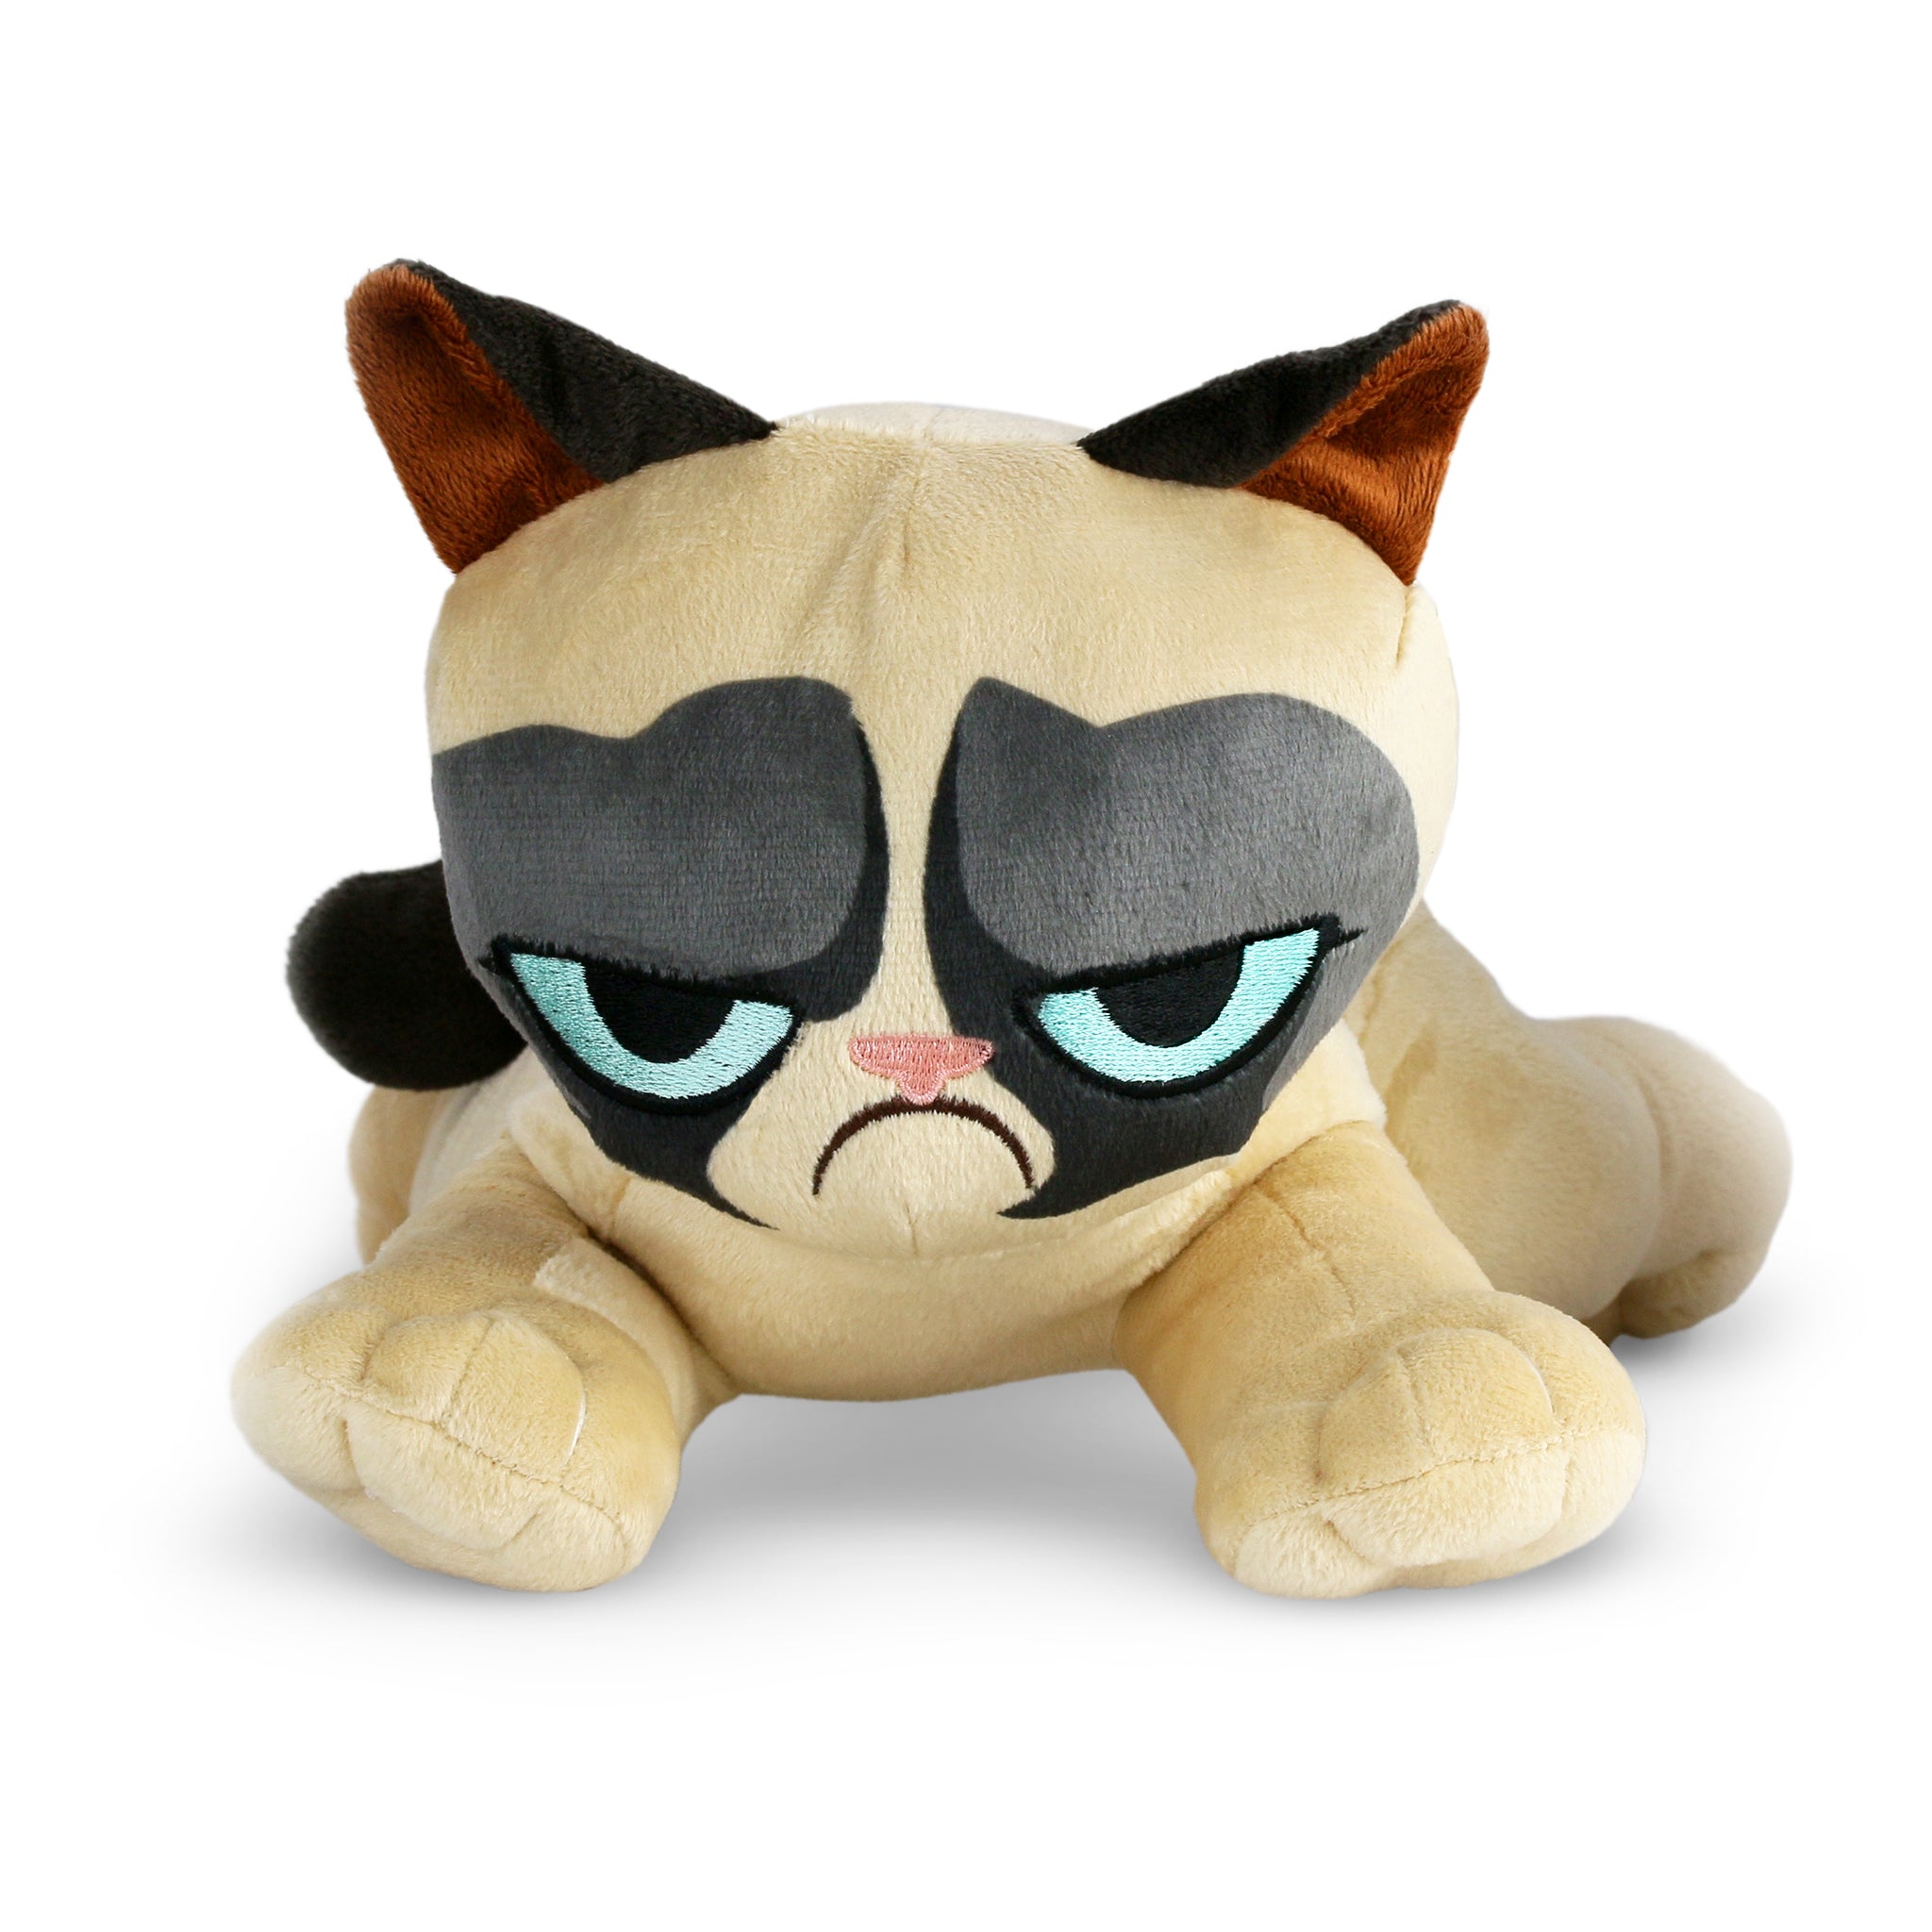 grumpy plush toy